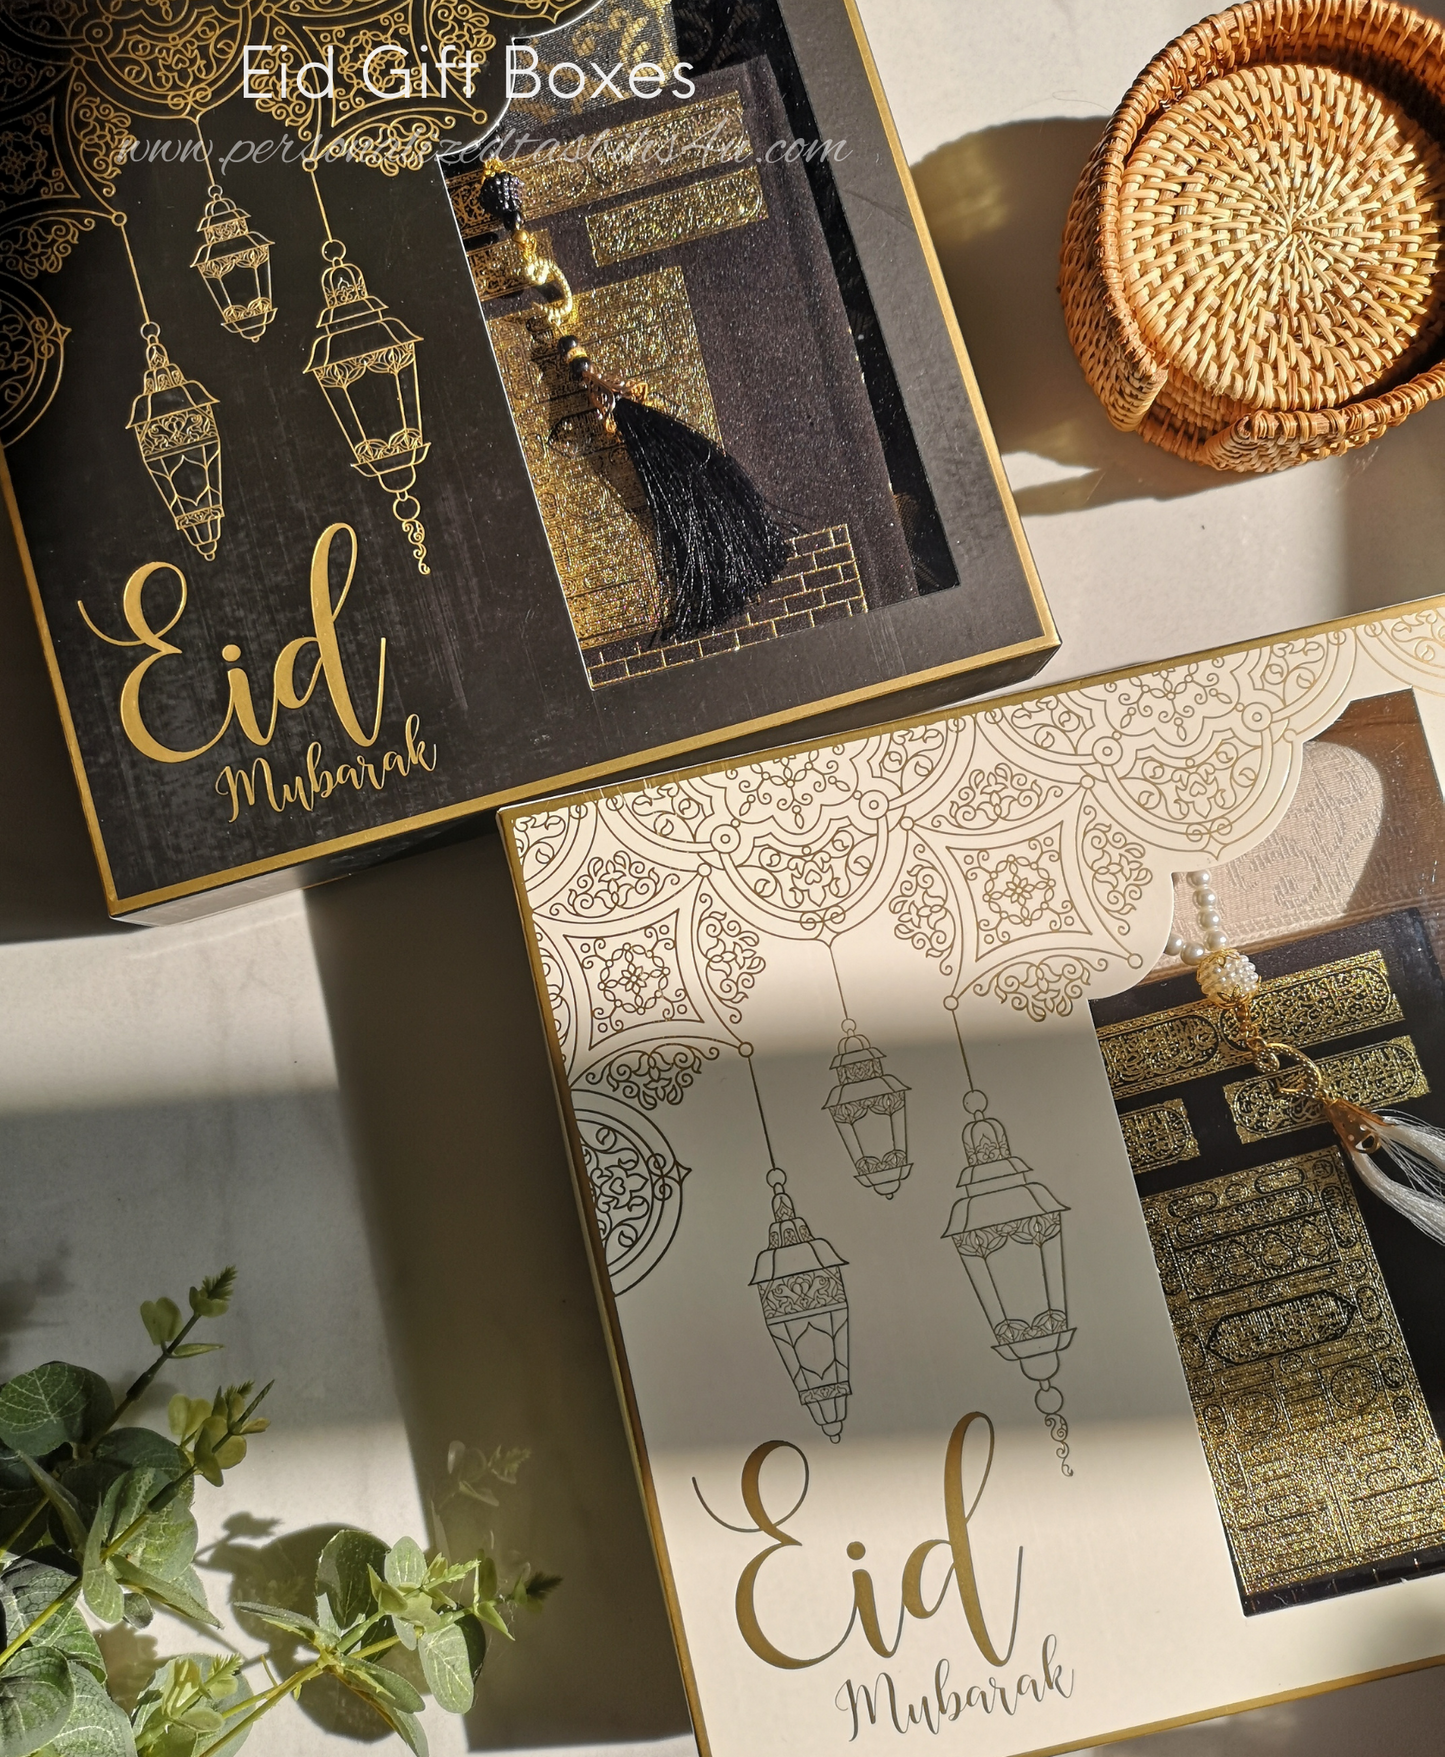 Eid Mubarak Gift Sets